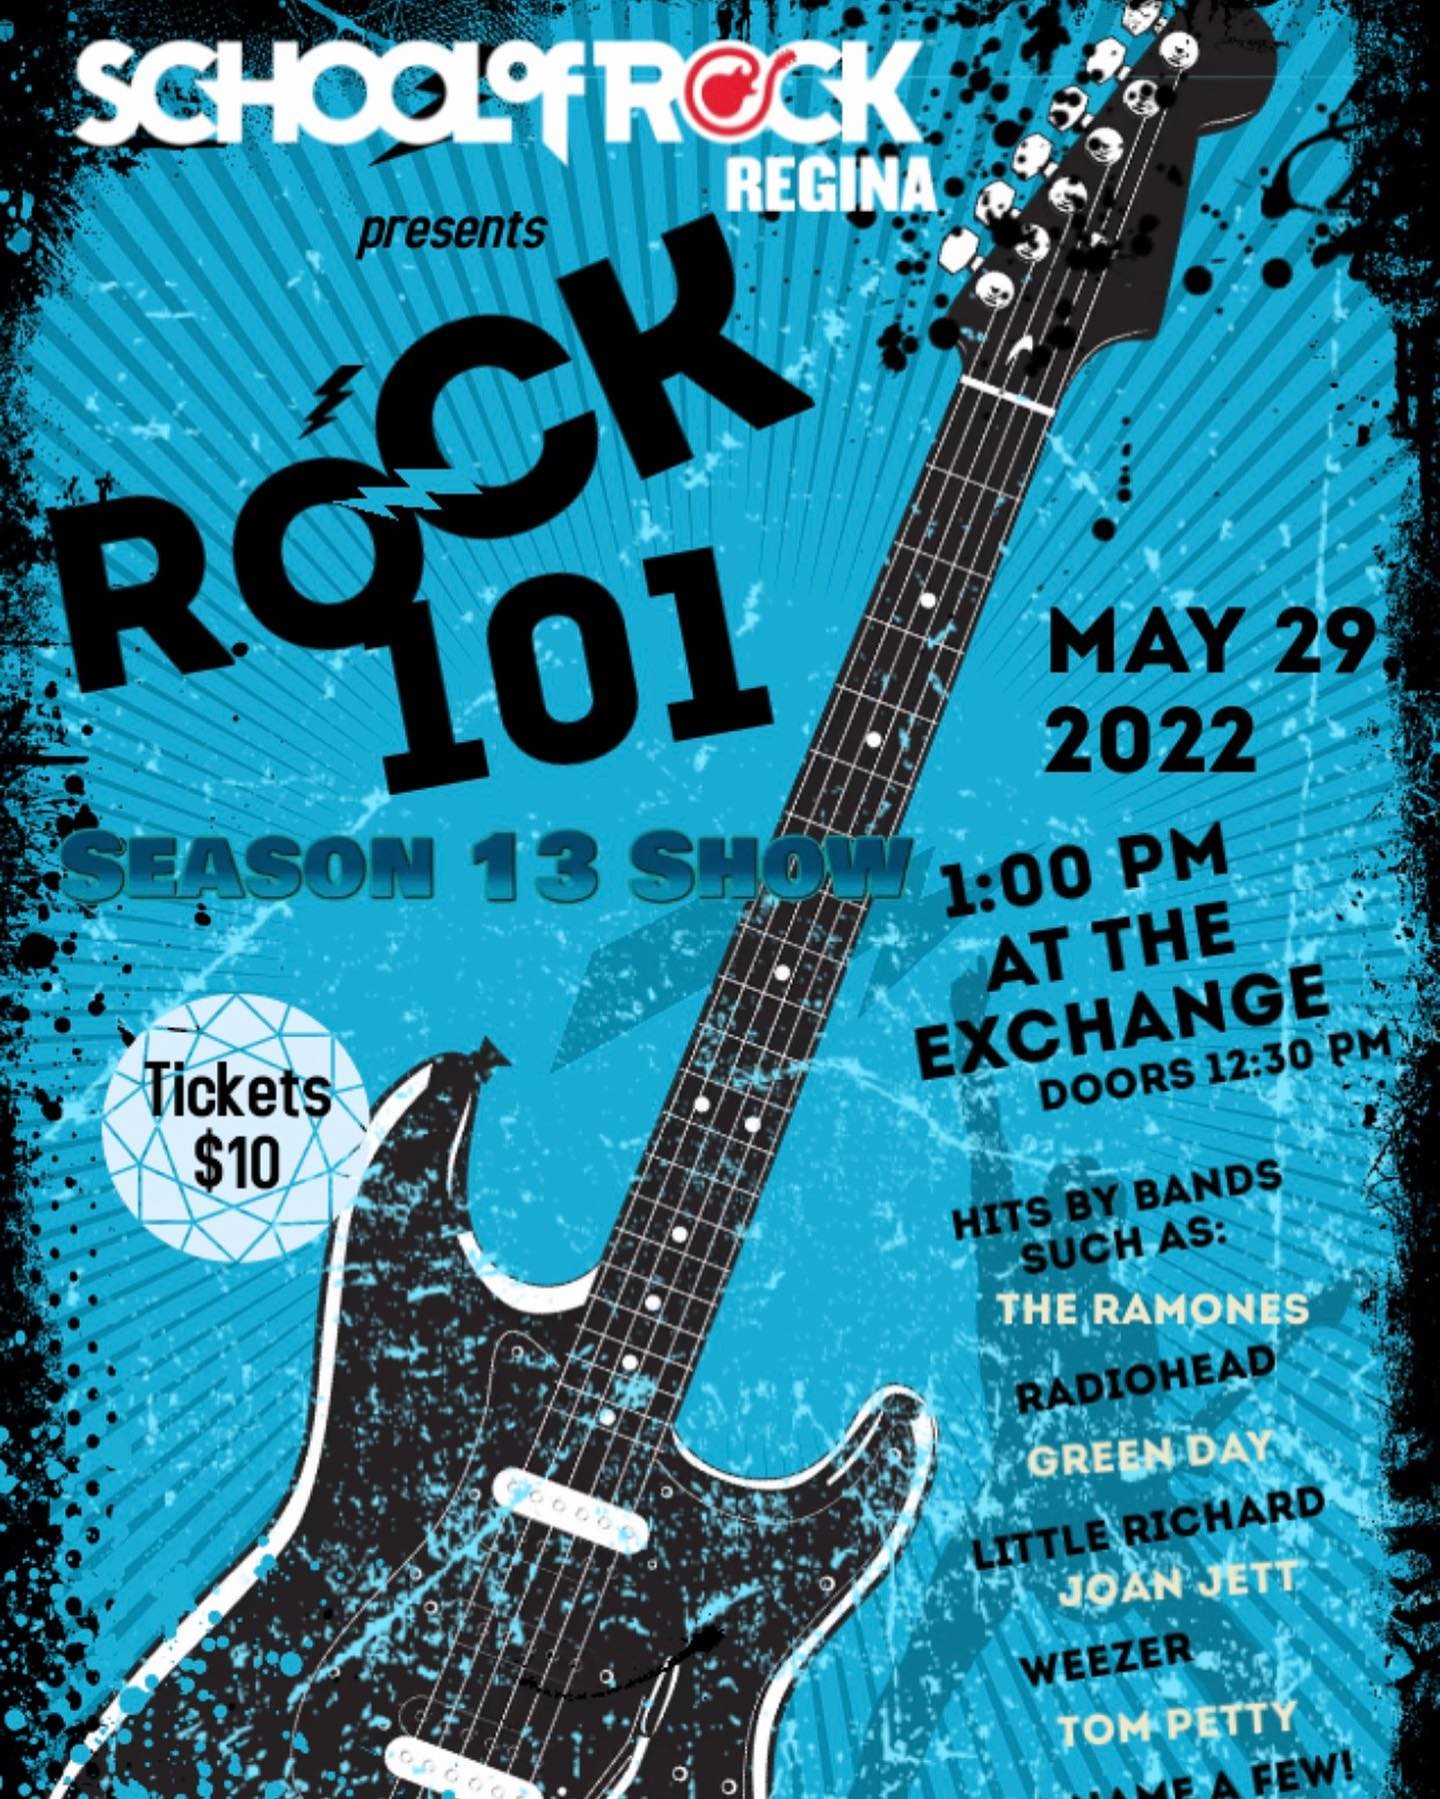 SCHOOL OF ROCK - ROCK 101